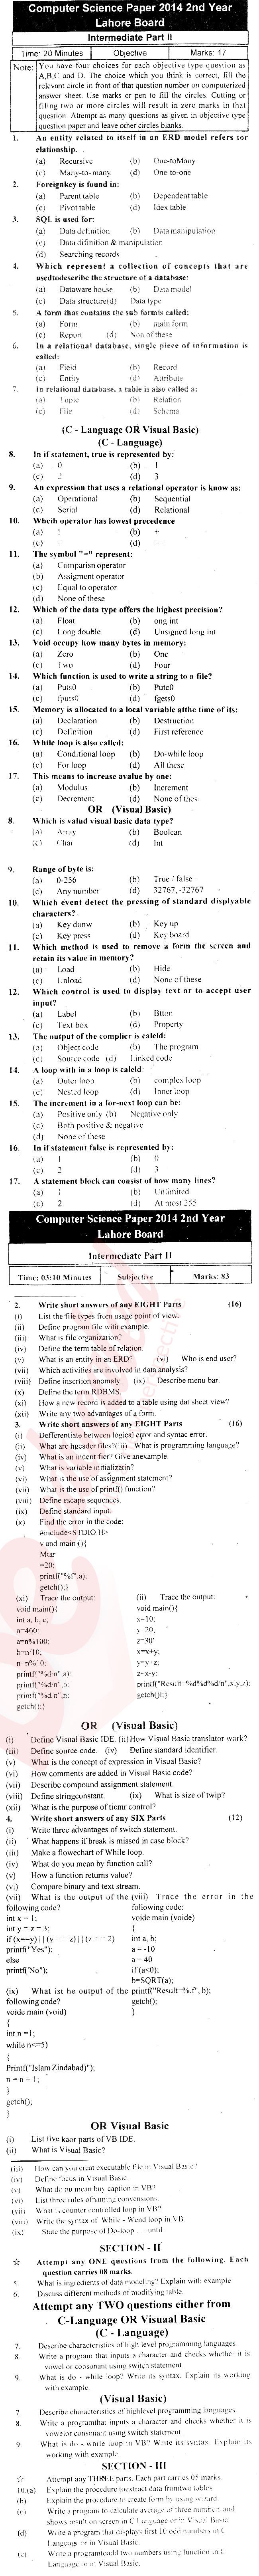 Computer Science ICS Part 2 Past Paper Group 1 BISE Lahore 2014